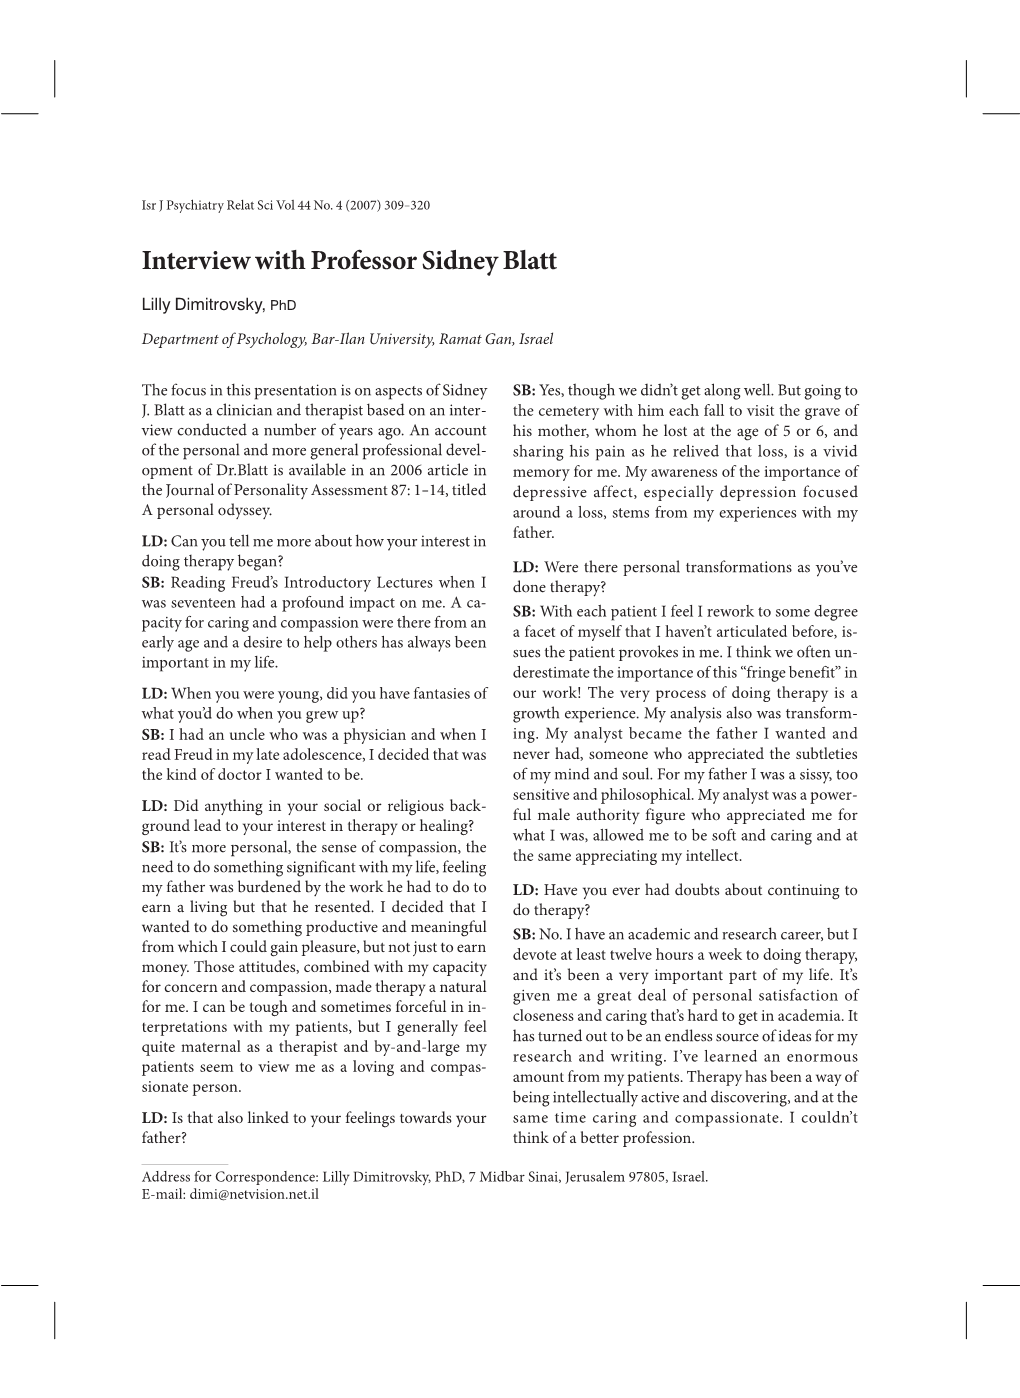 Interview with Professor Sidney Blatt